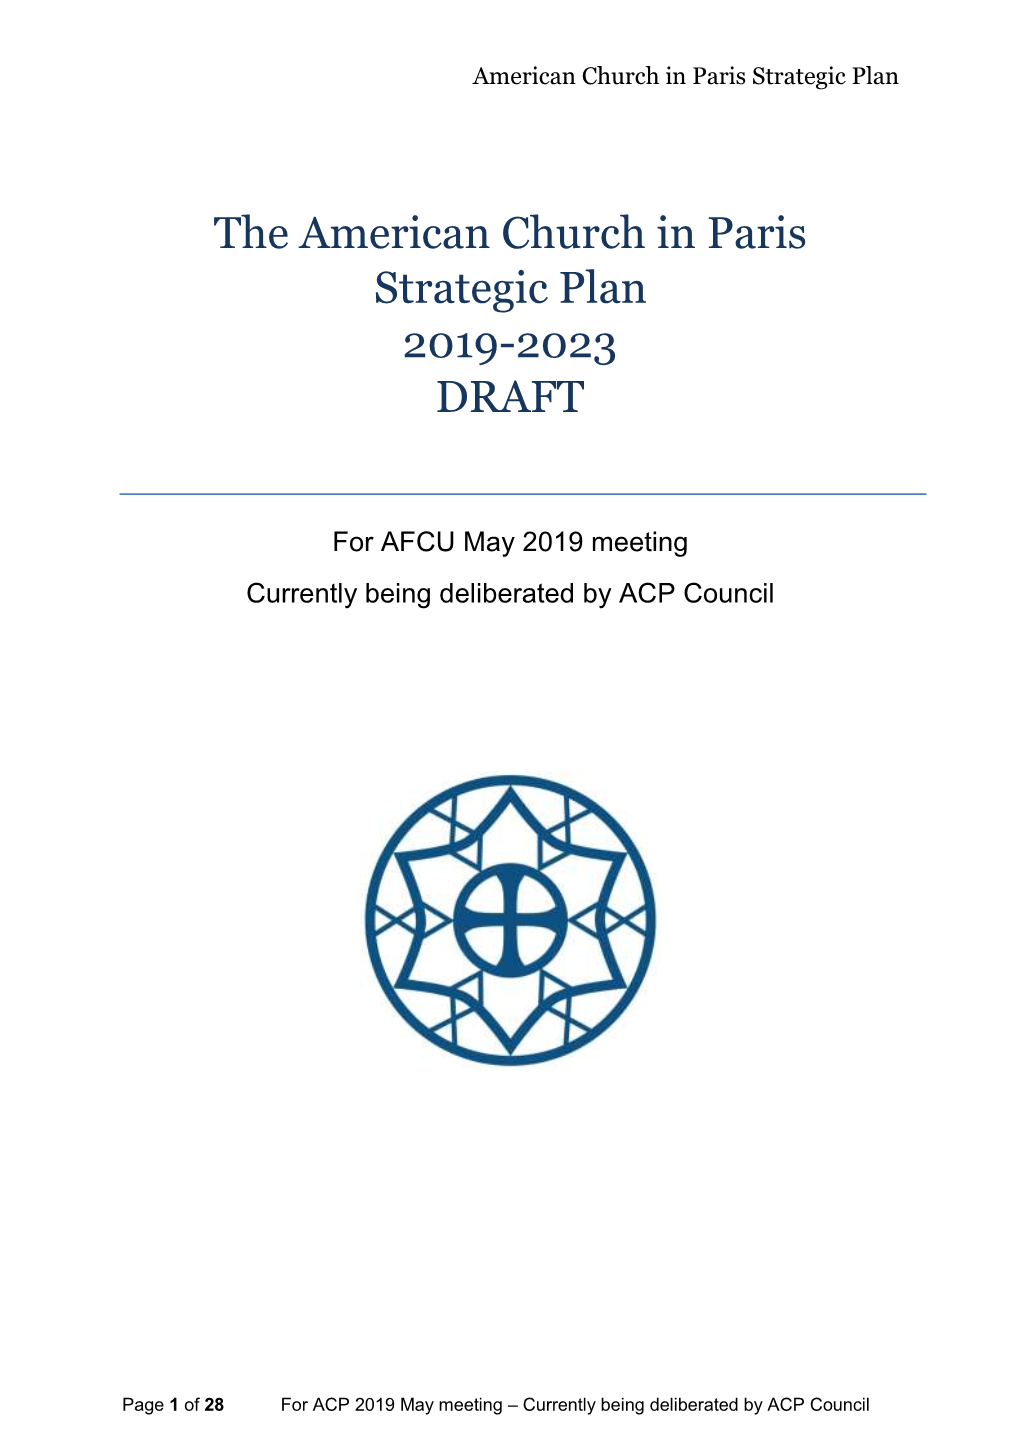 The American Church in Paris Strategic Plan 2019-2023 DRAFT